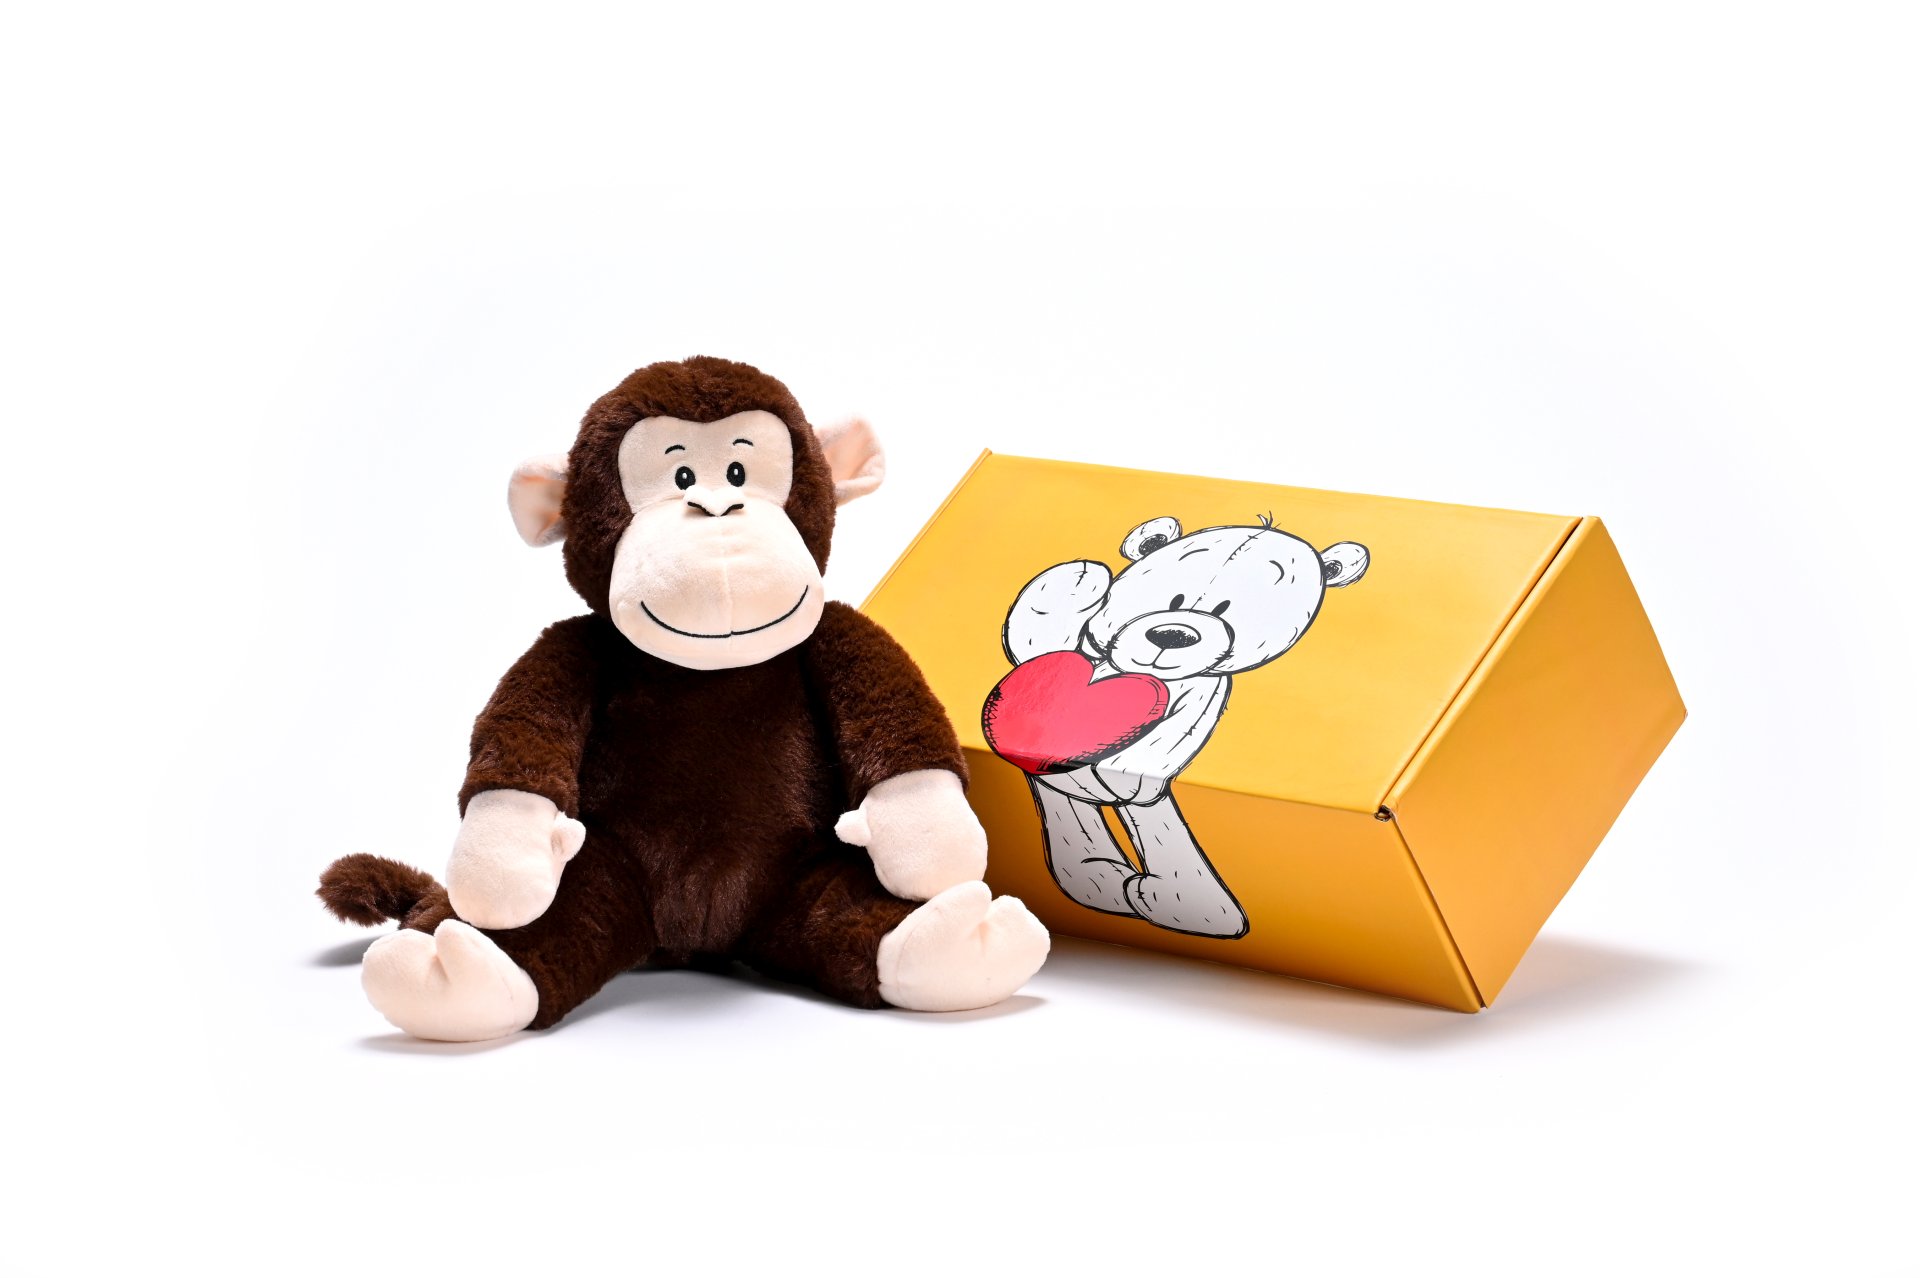 a stuffed monkey soft toy next to a box